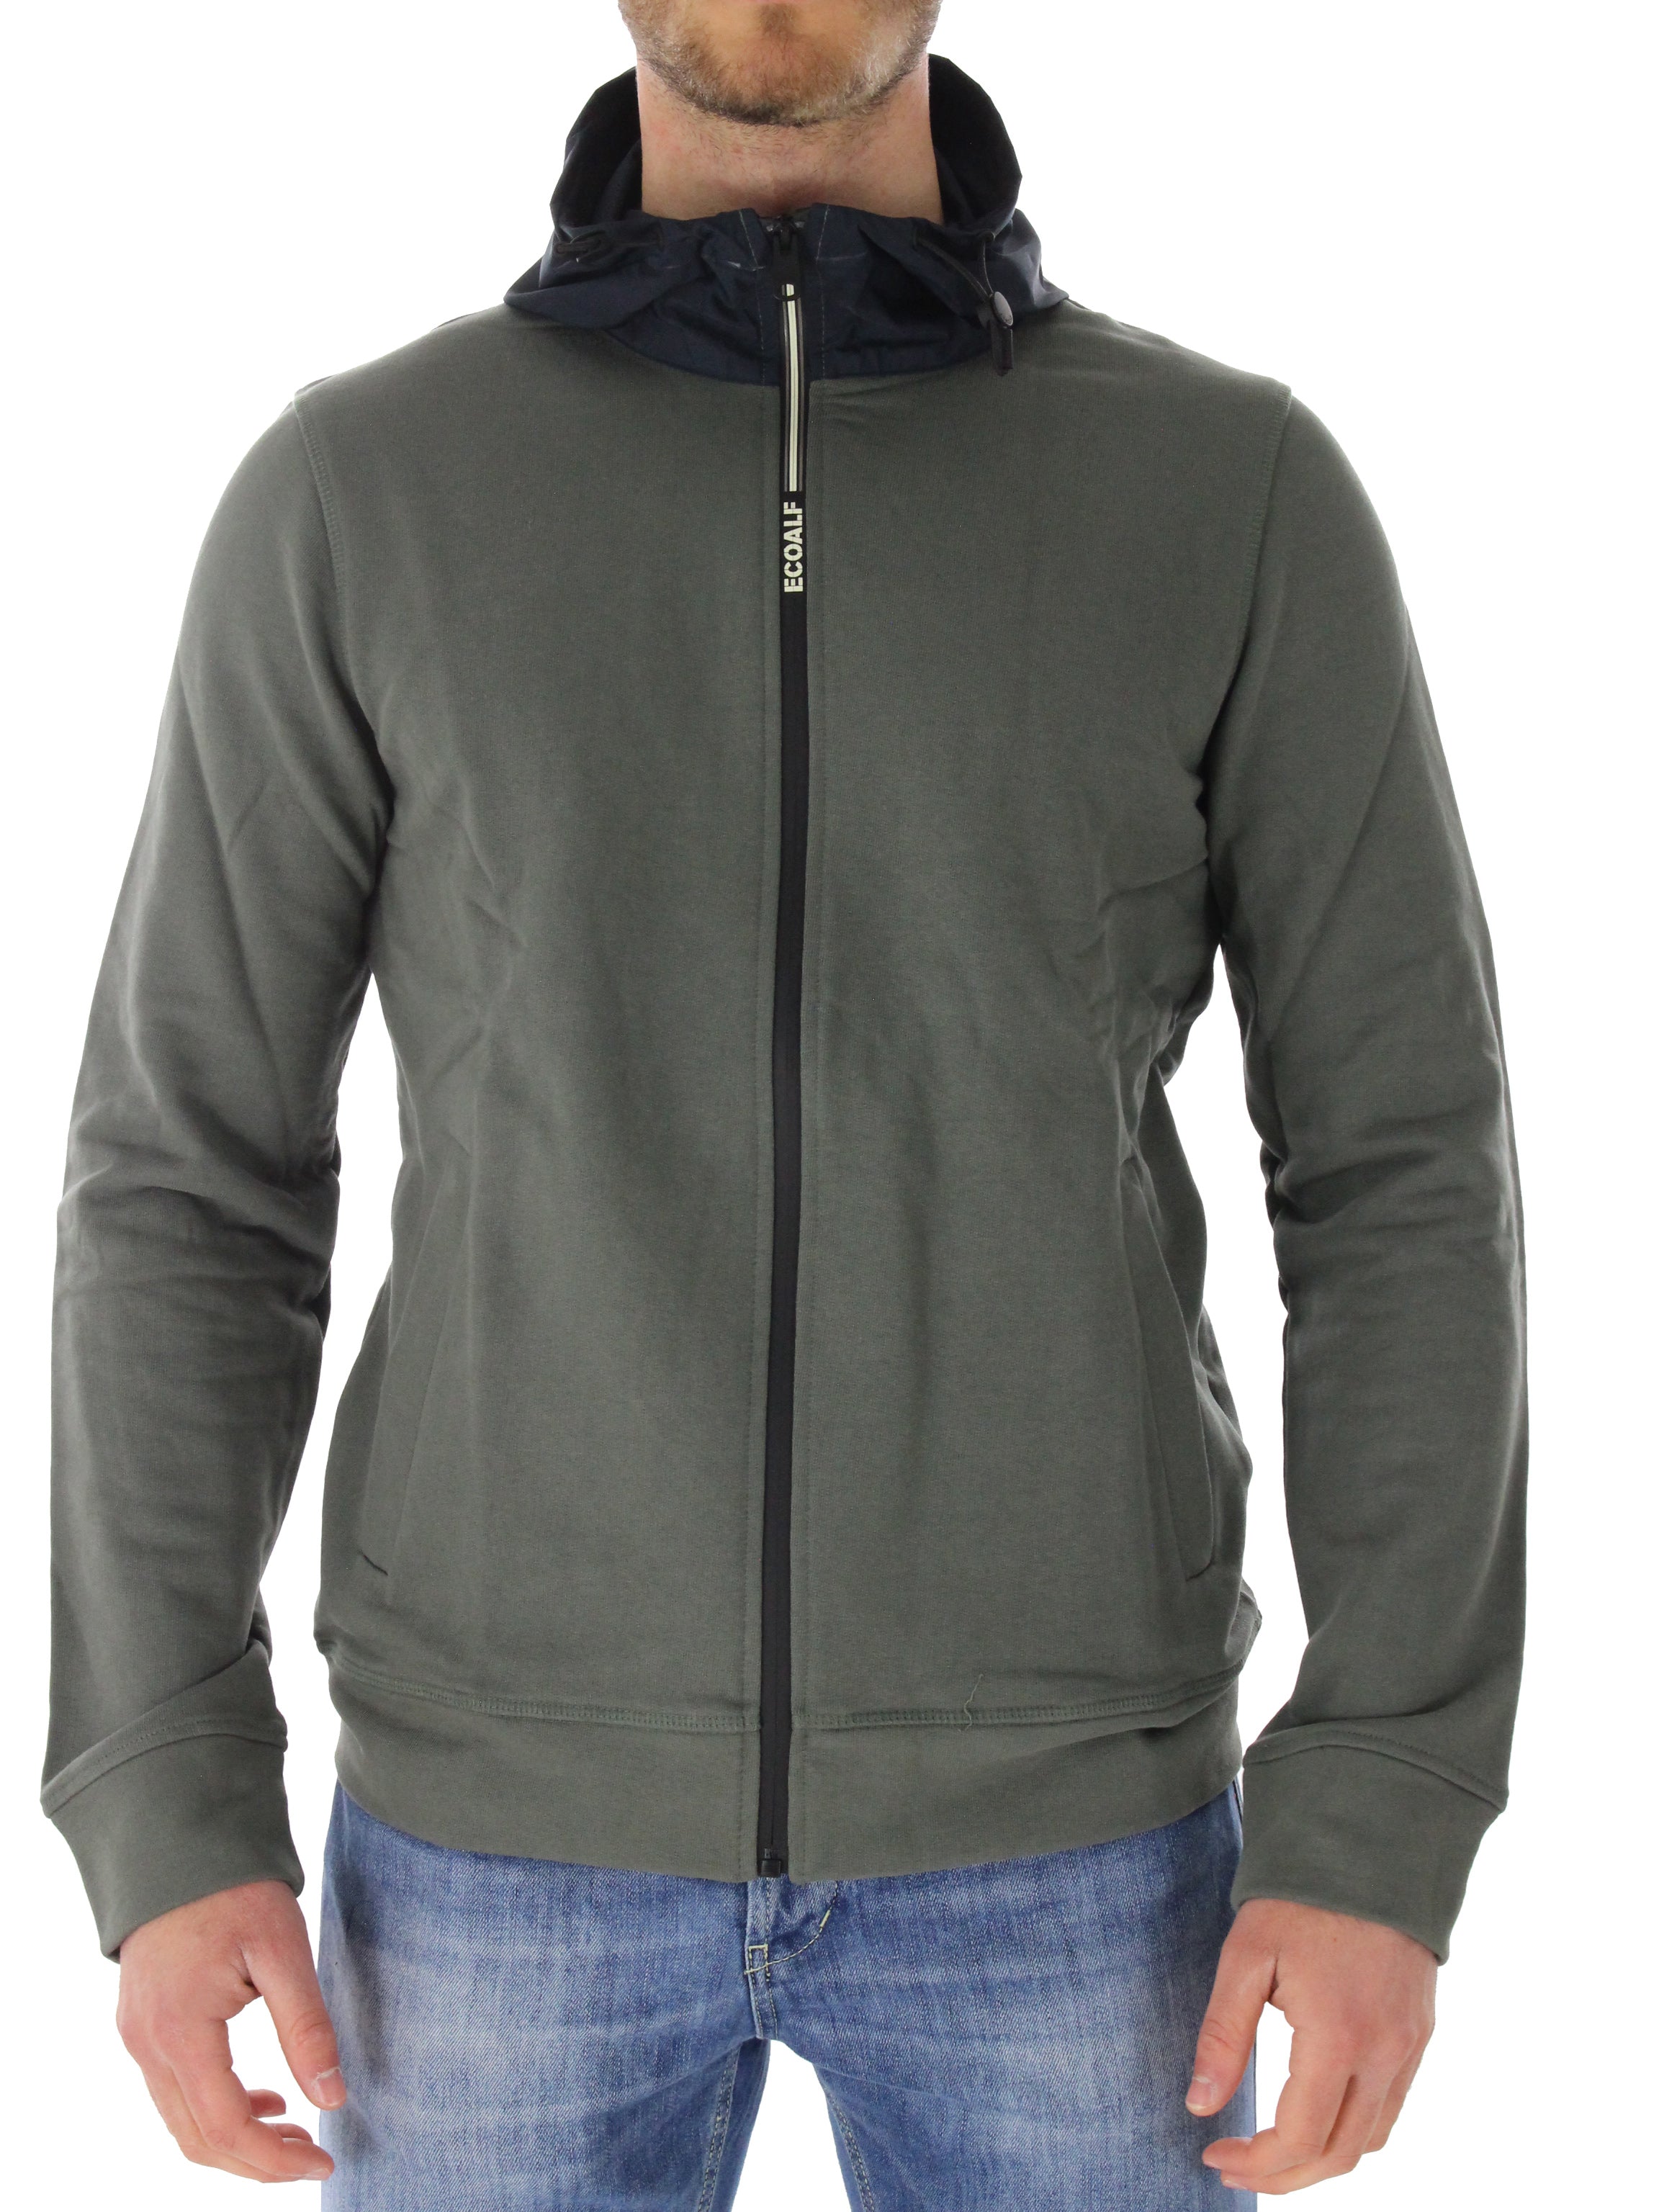 Green Sazbialf hooded zip sweatshirt